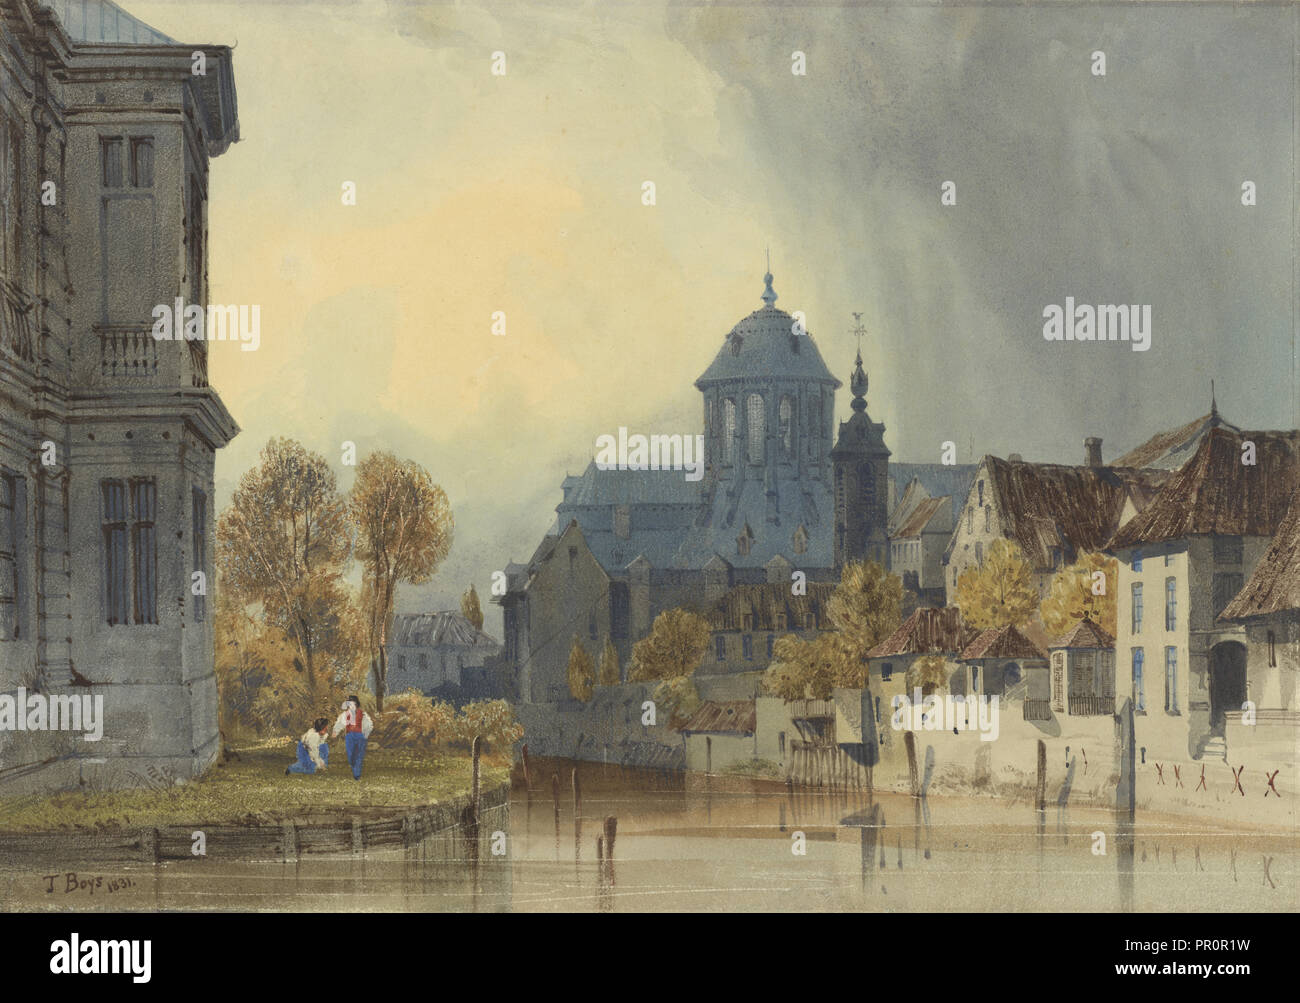 Mechelen malines belgium hi-res stock photography and images - Alamy